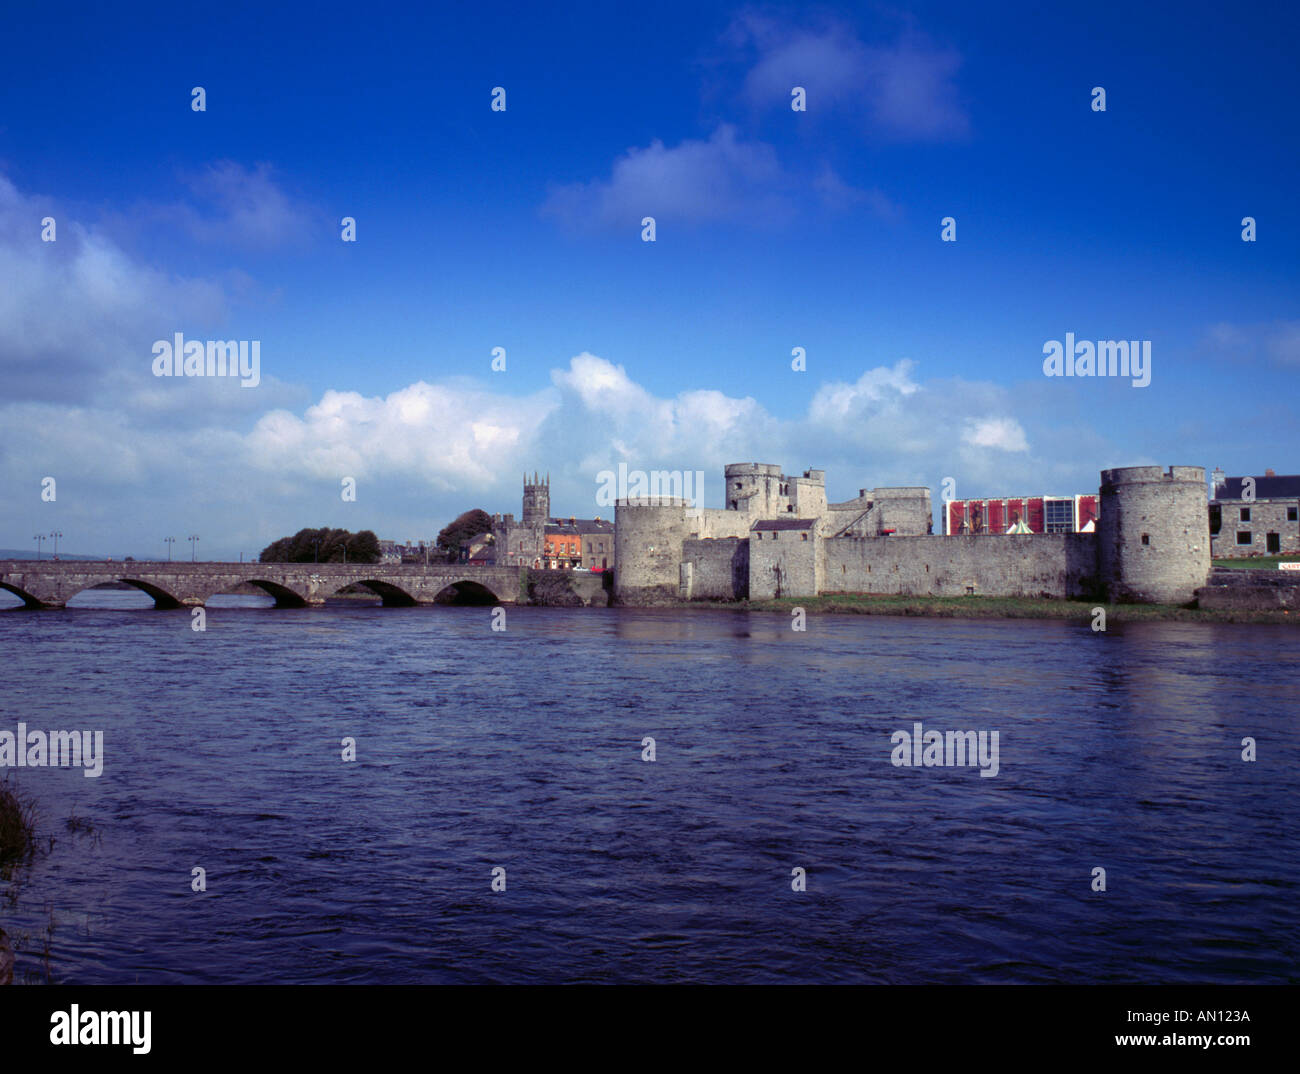 Thomond Bridge and King John's Castle seen over the River Shannon, Limerick, County Limerick, Eire (Ireland). Stock Photo